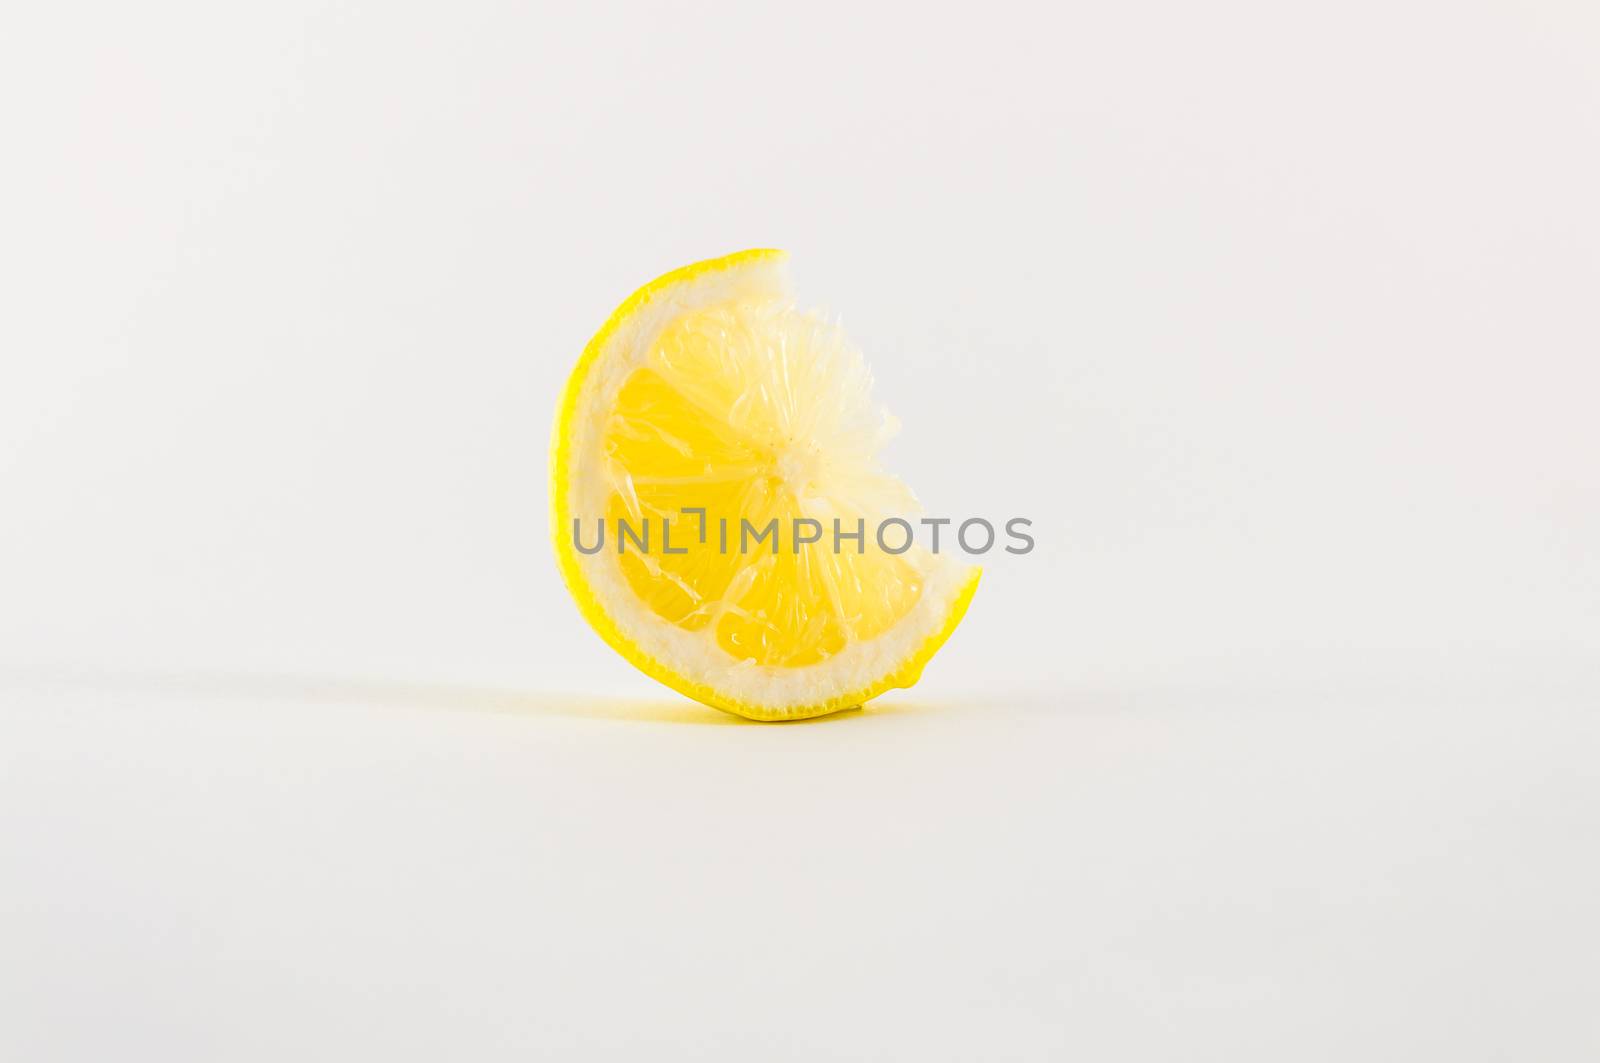 Slice of fresh lemon yellow on white background